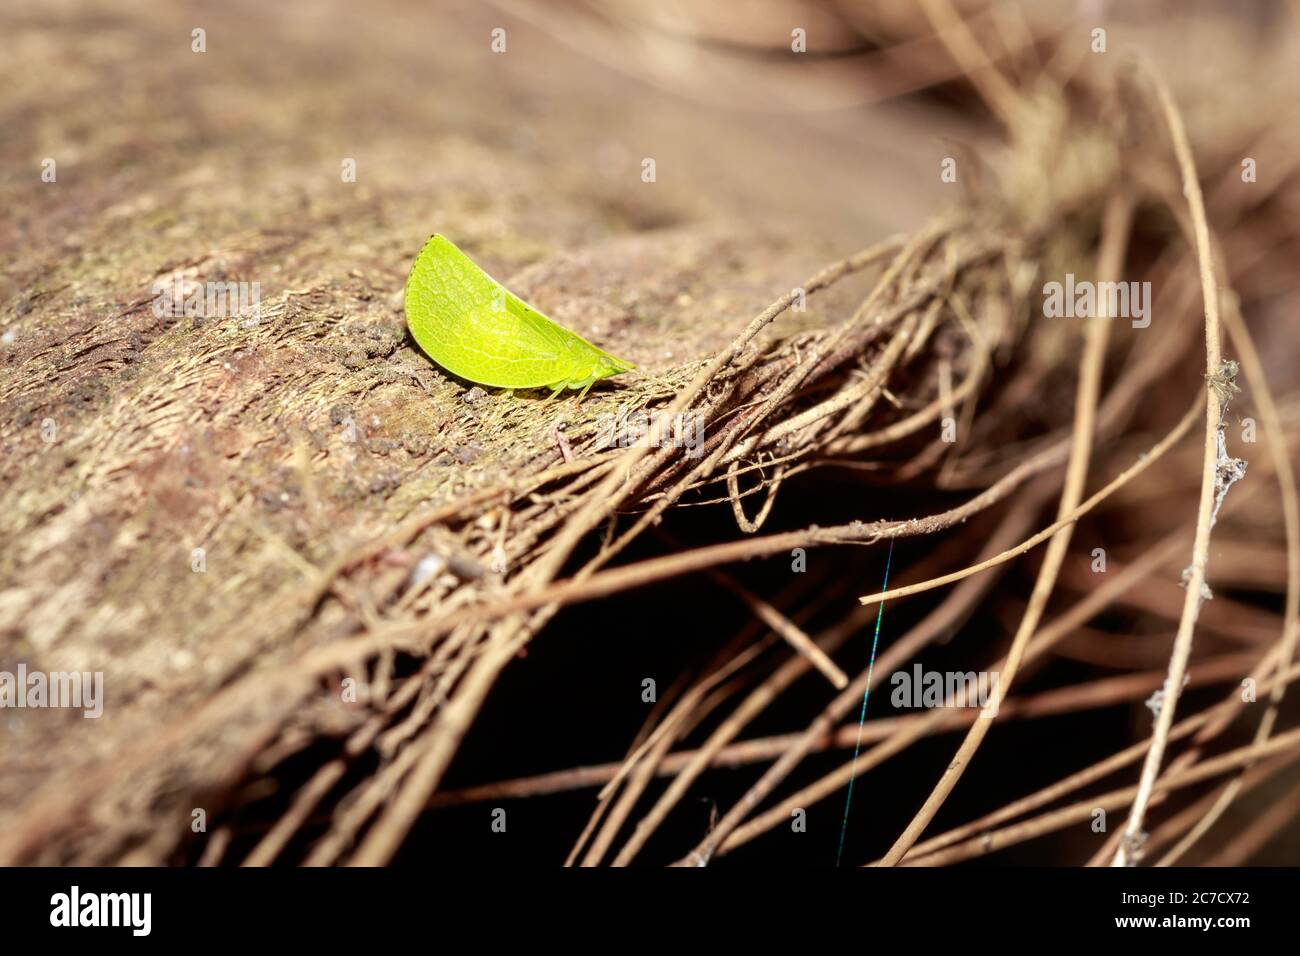 Green katydid (Tettigoniidae) sitting on a dry bark, Uganda, Africa Stock Photo